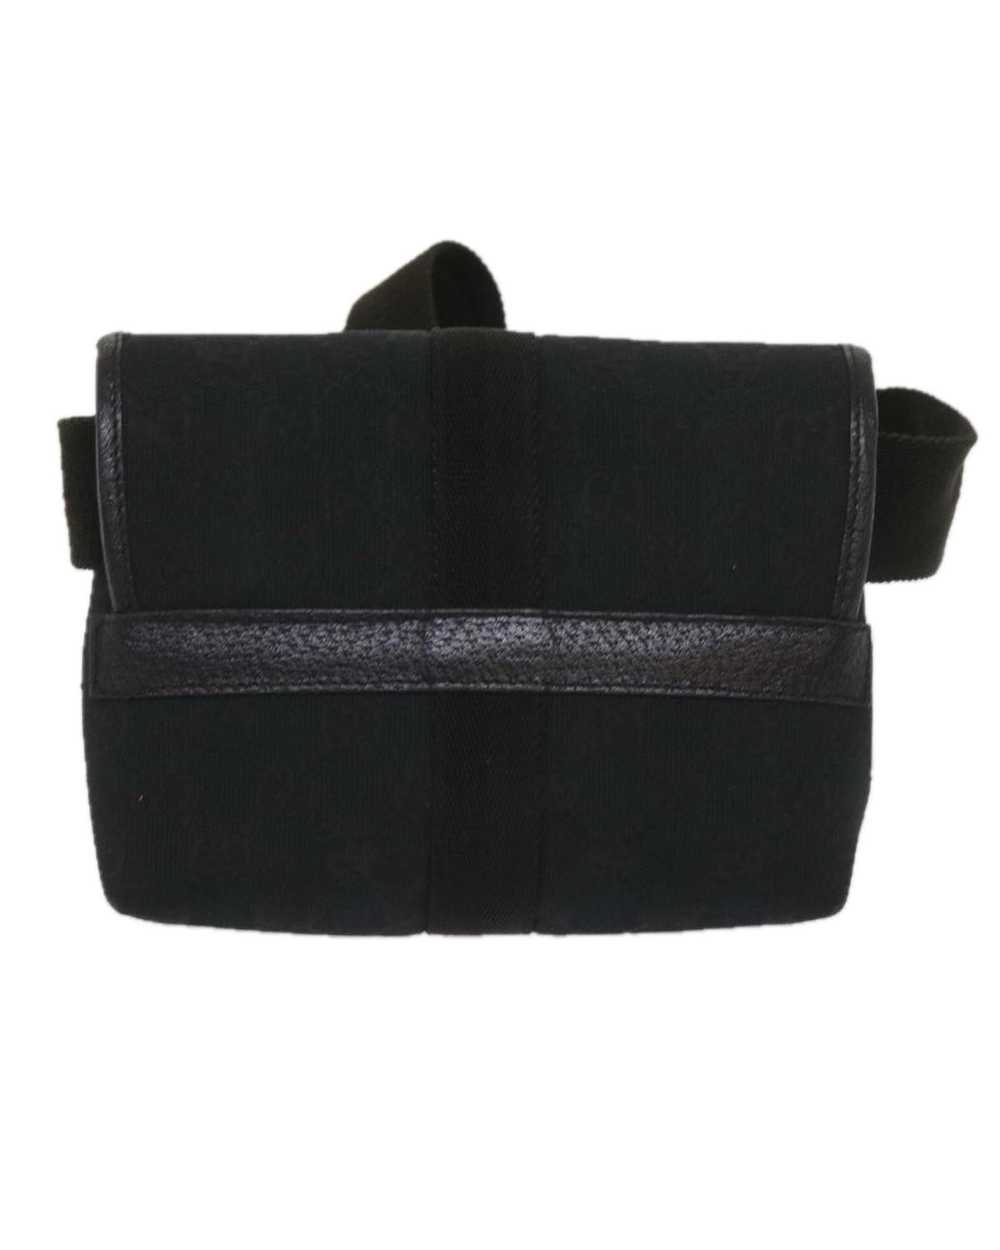 Gucci Luxury GG Canvas Shoulder Bag - image 3